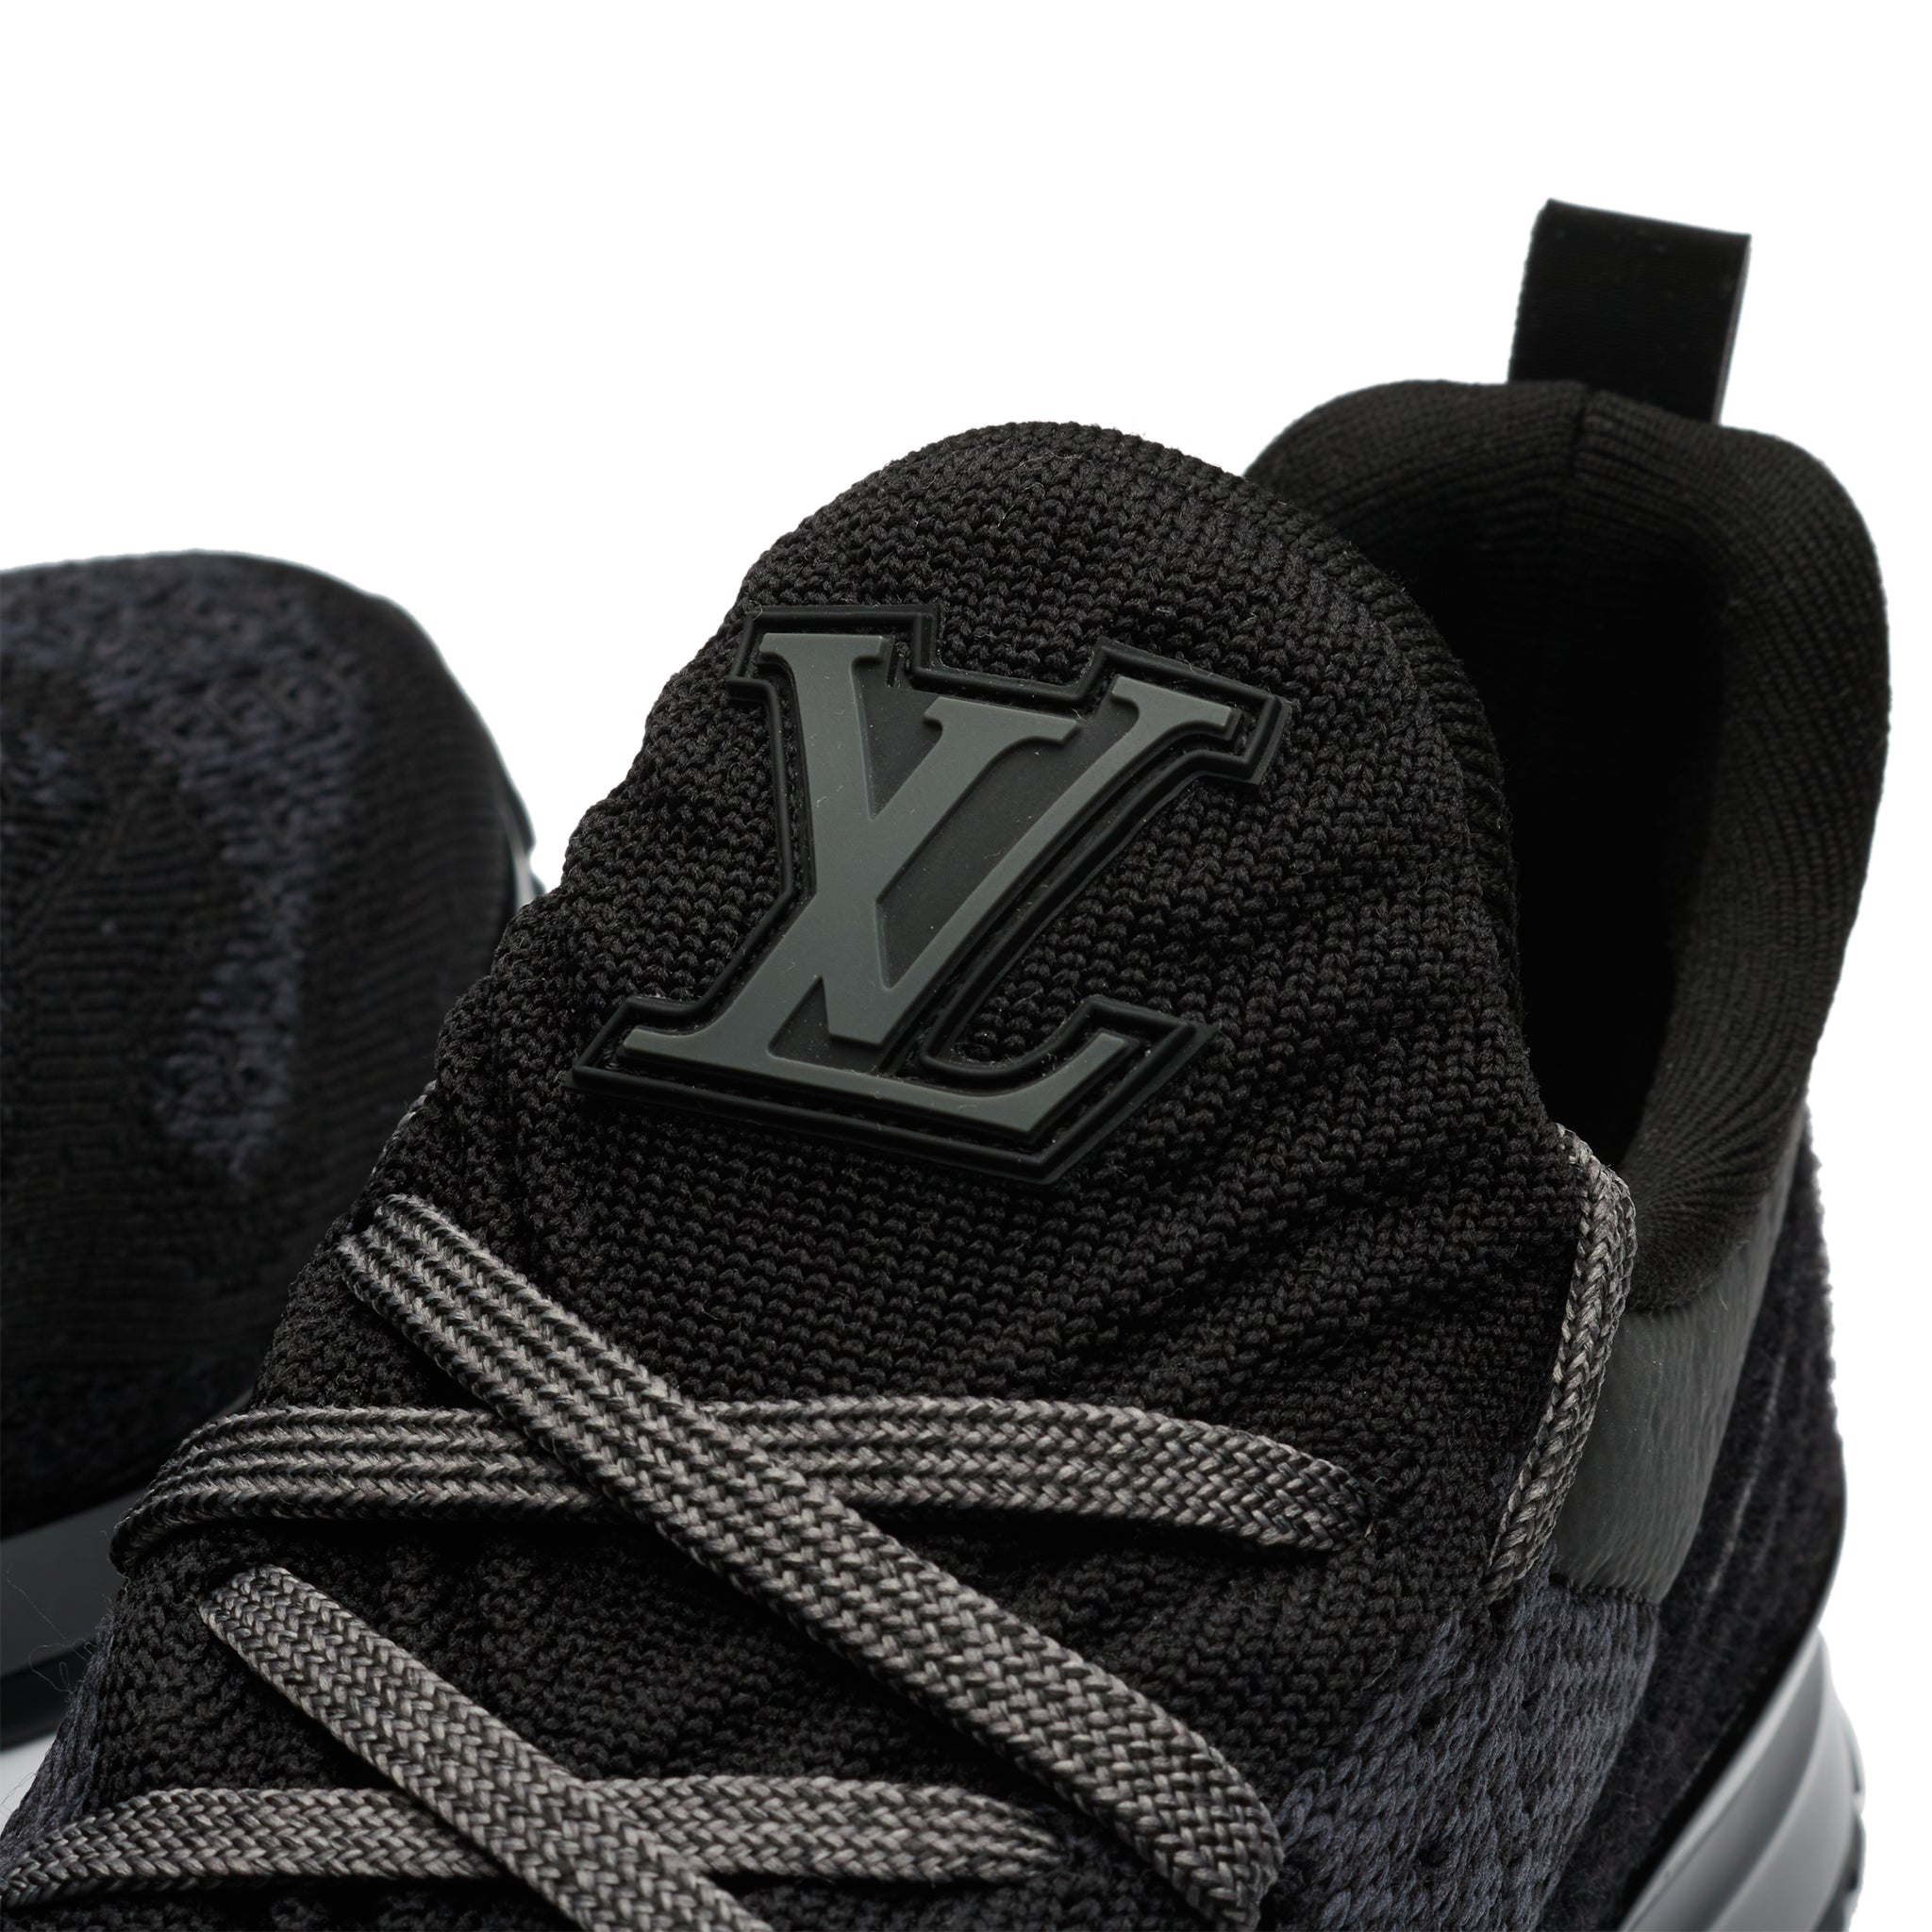 Louis Vuitton V.n.r Sneaker Blue Us 8.5